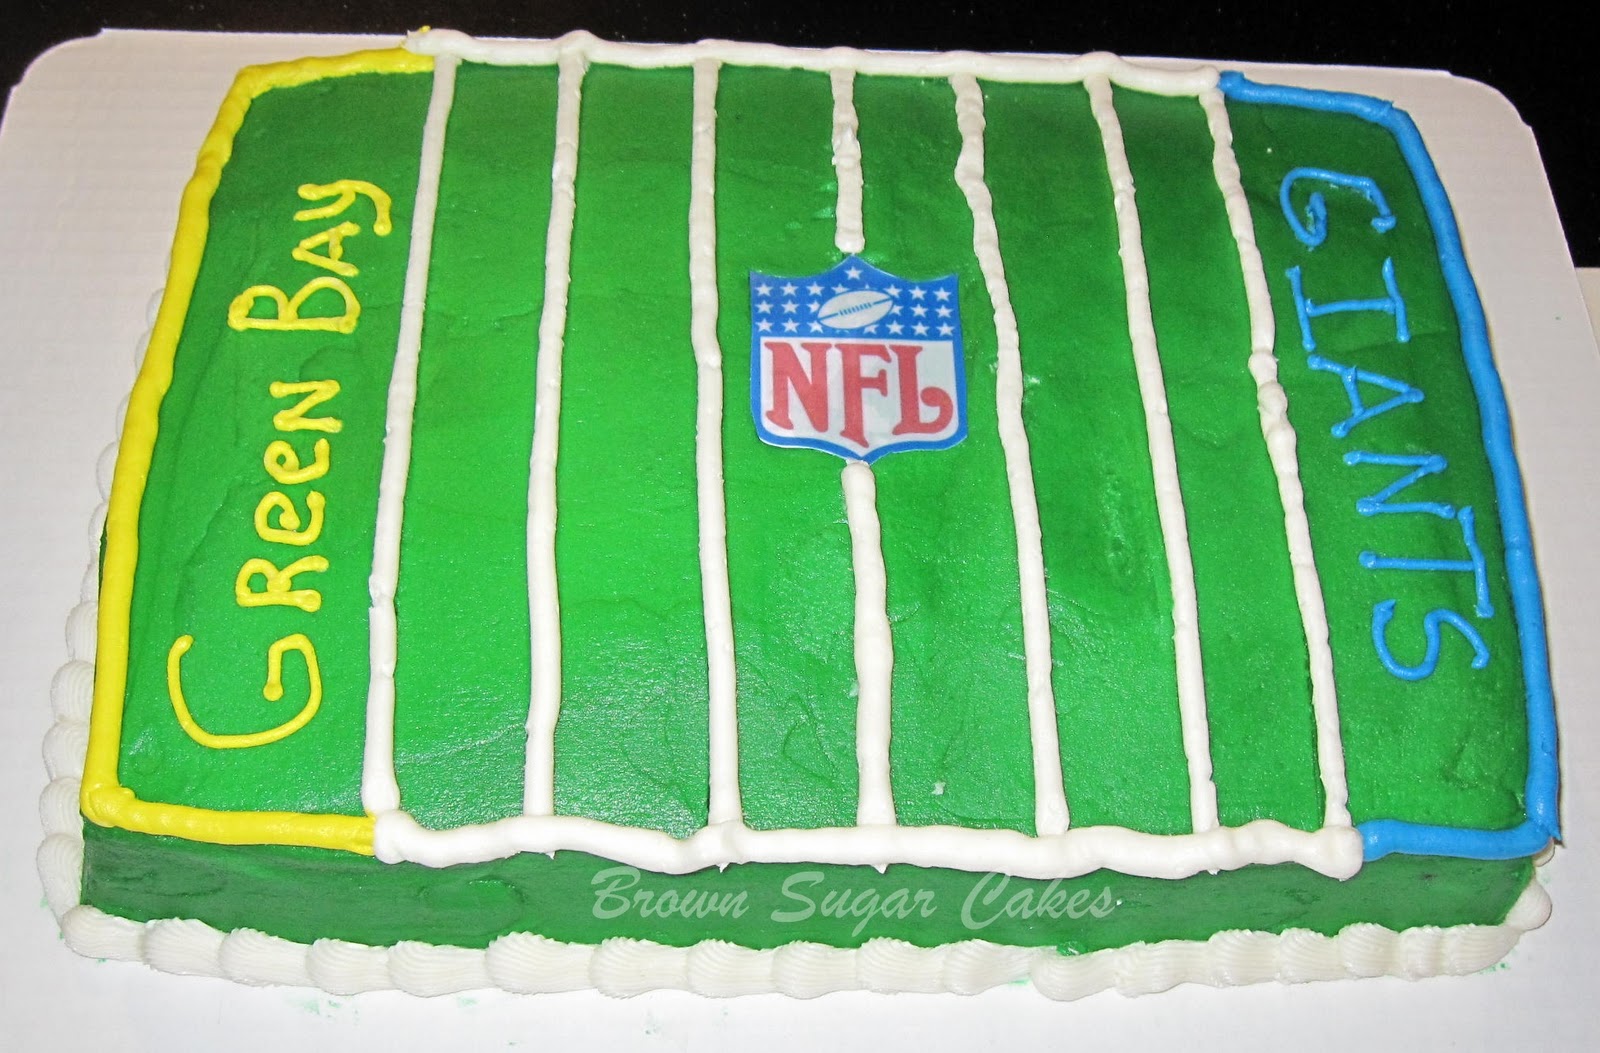 Brown Sugar Cakes: Football Cake